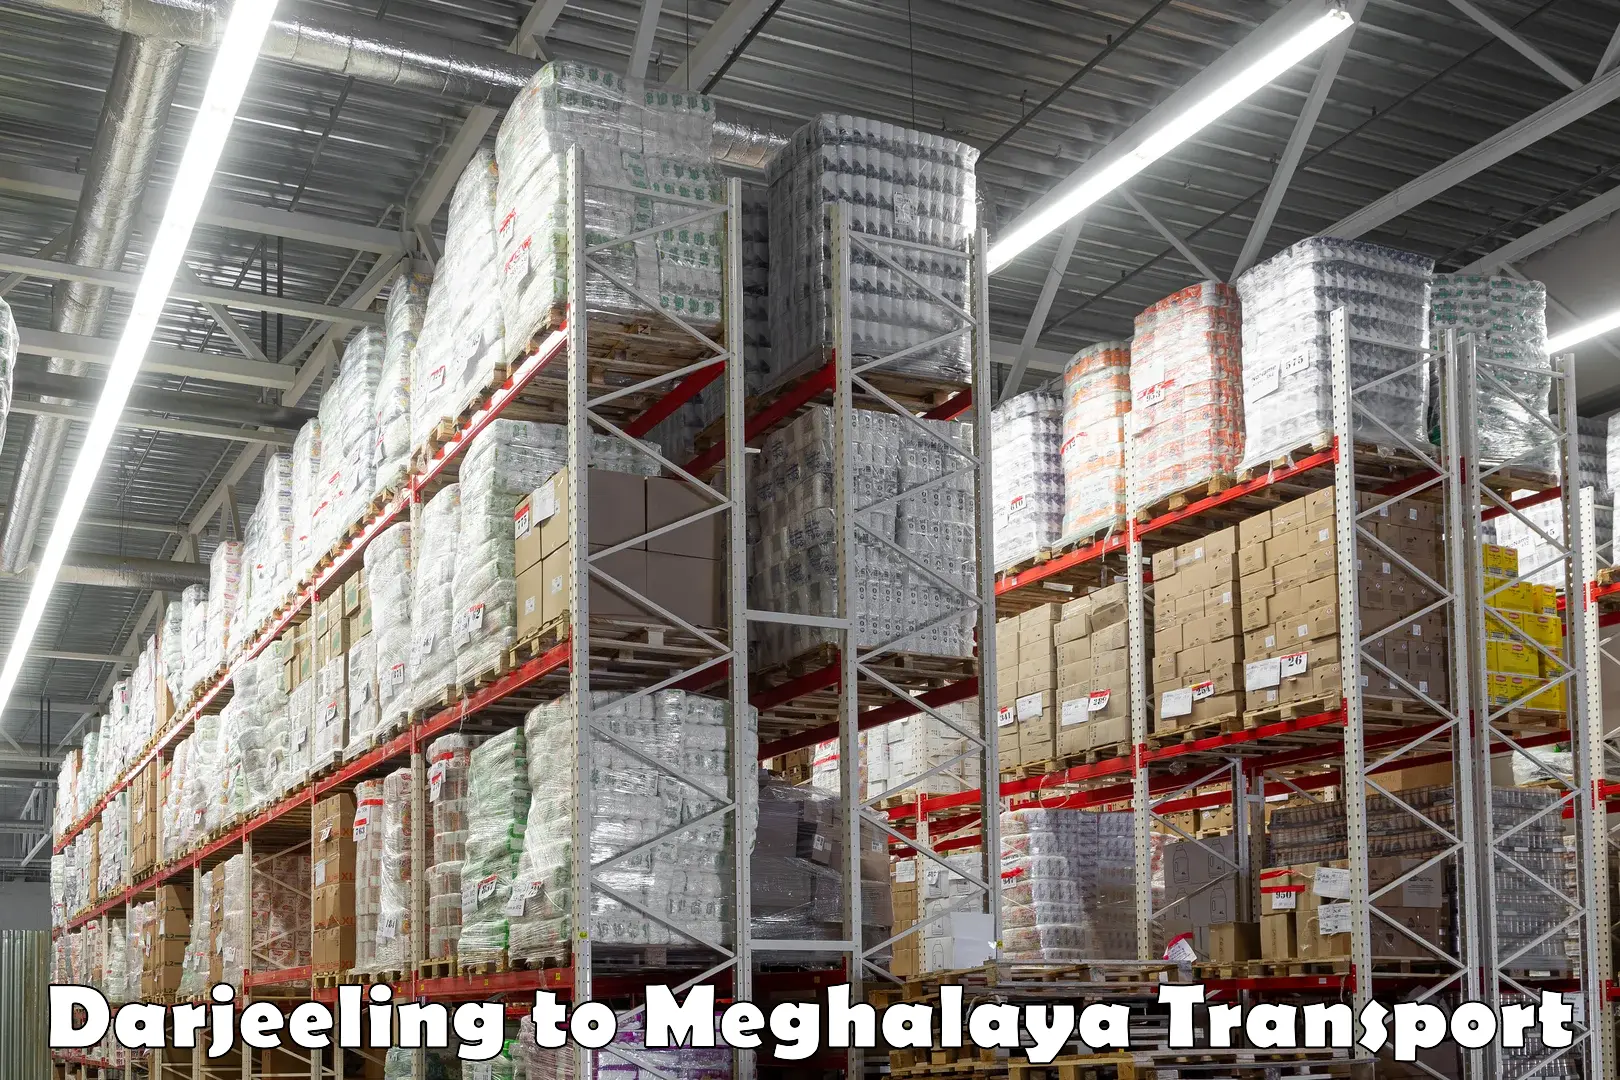 Goods delivery service Darjeeling to Meghalaya